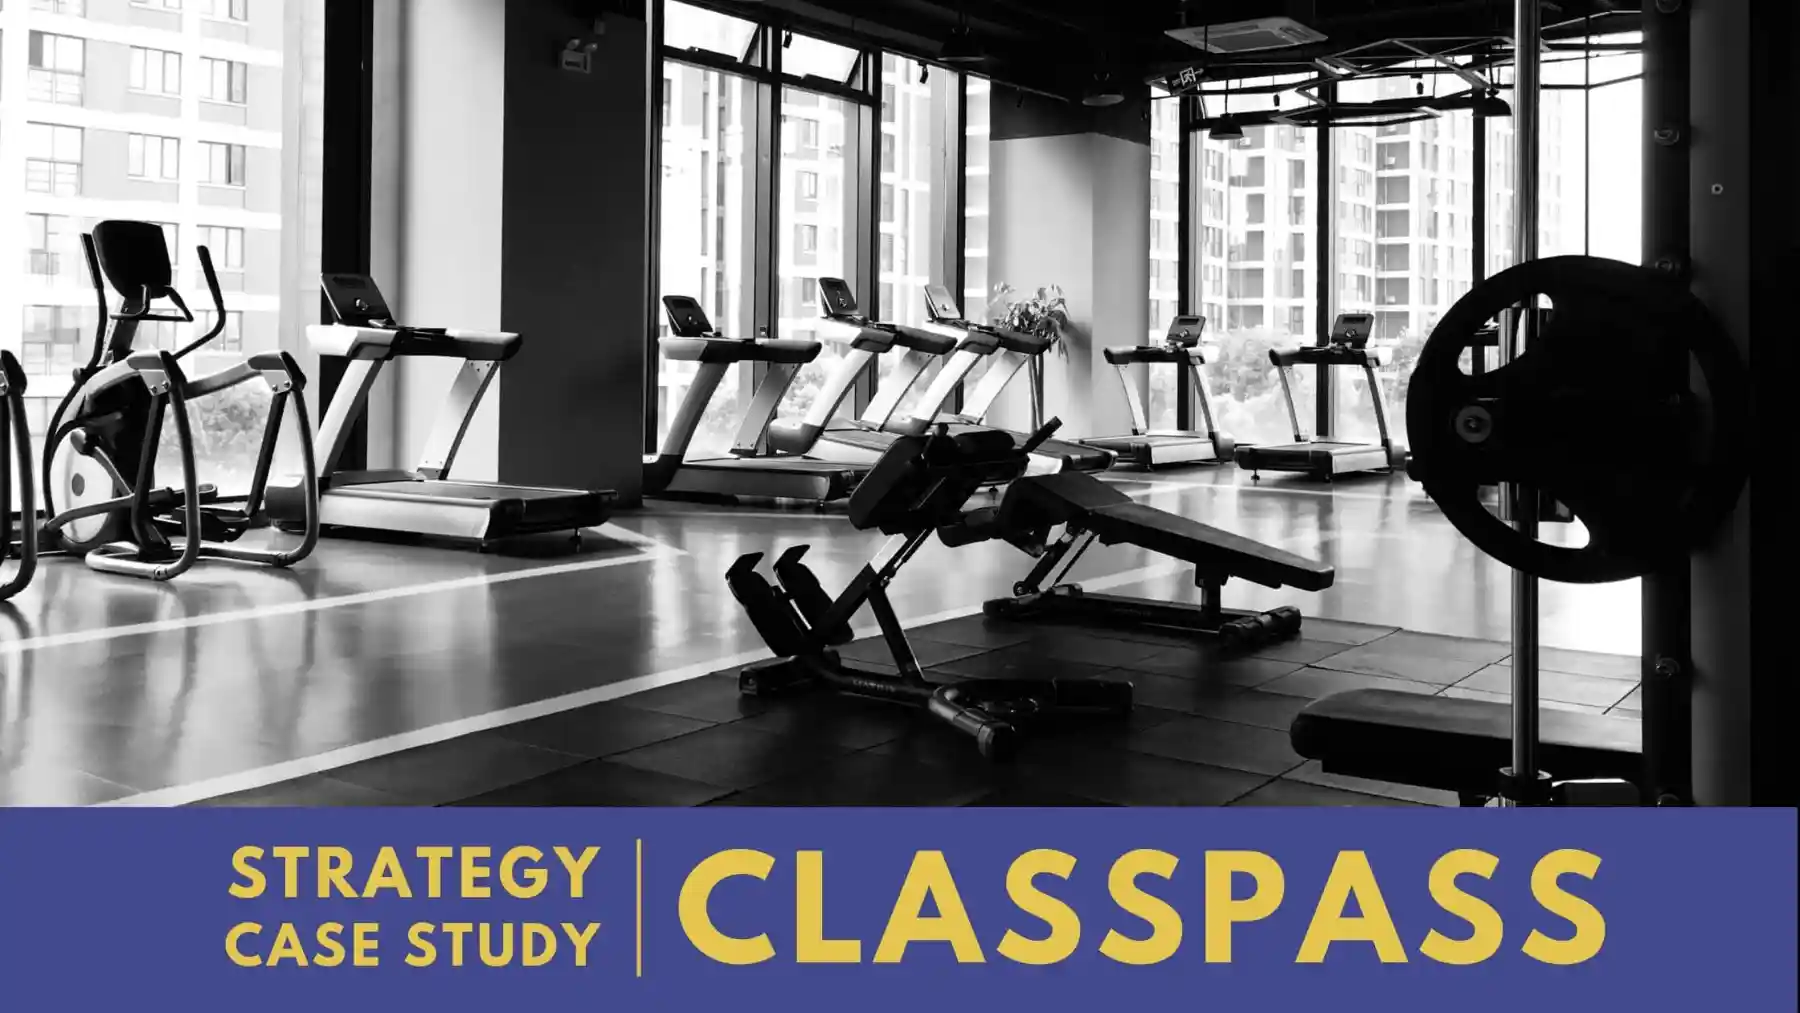 Strategy Case Study ClassPass Business Model